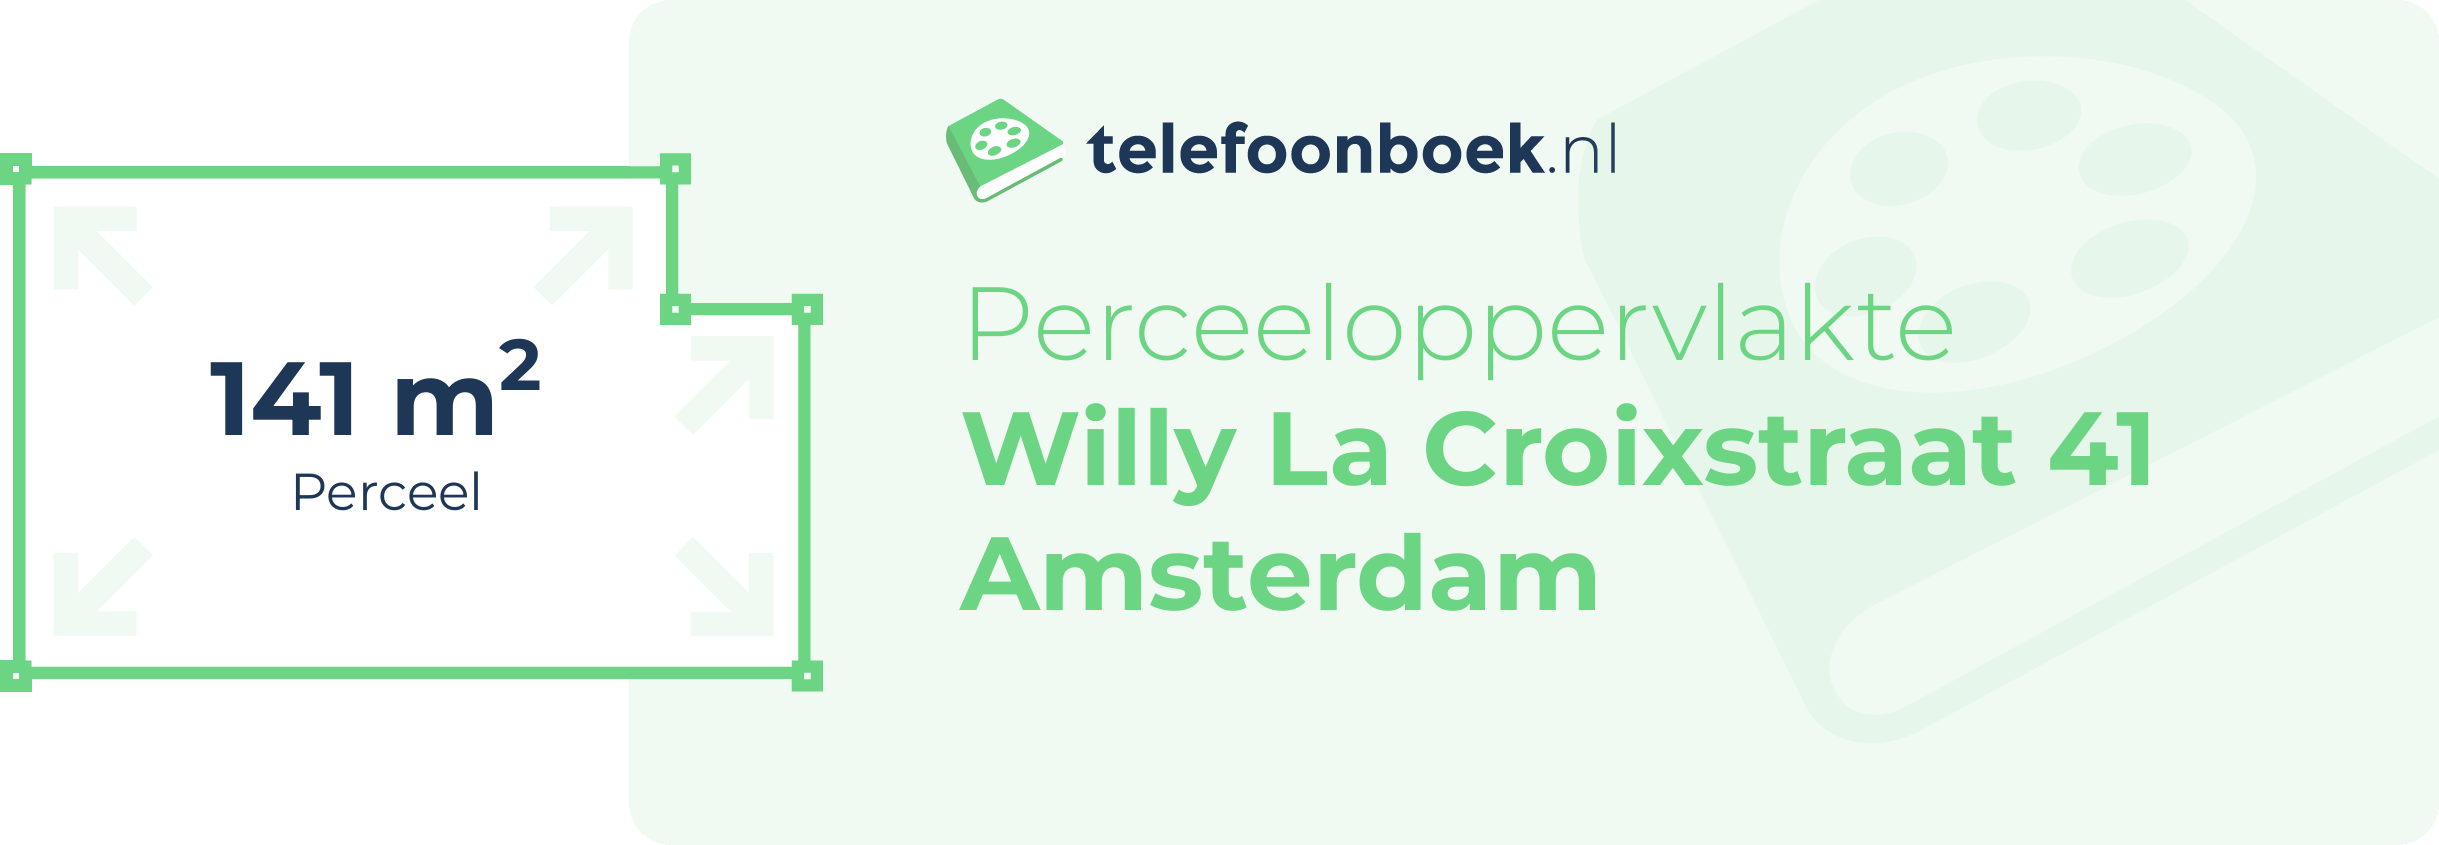 Perceeloppervlakte Willy La Croixstraat 41 Amsterdam